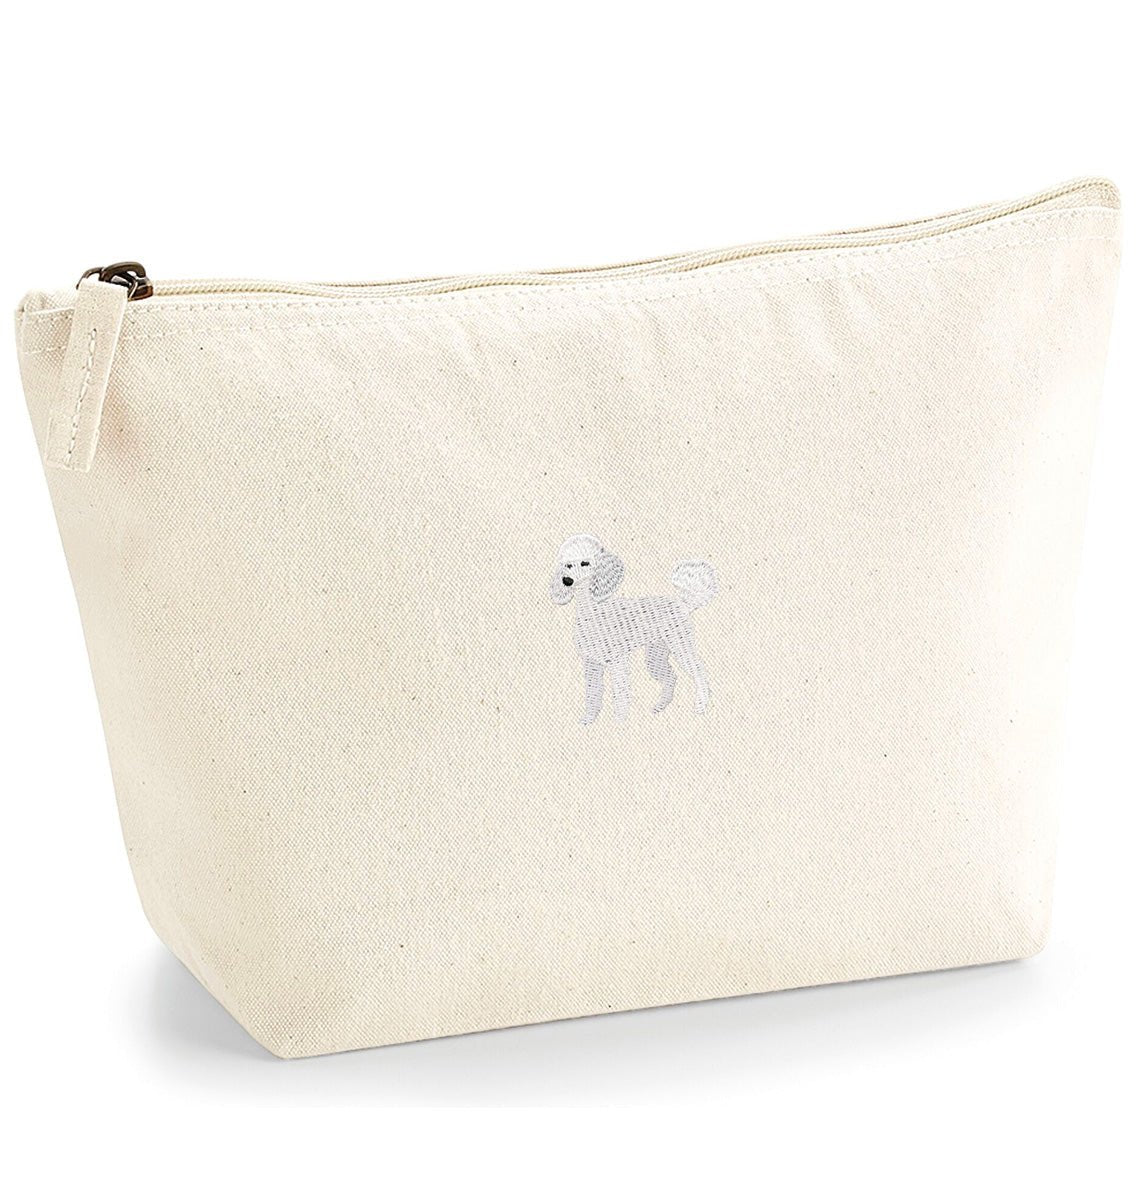 Poodle Organic Accessory Bag - Blue Panda